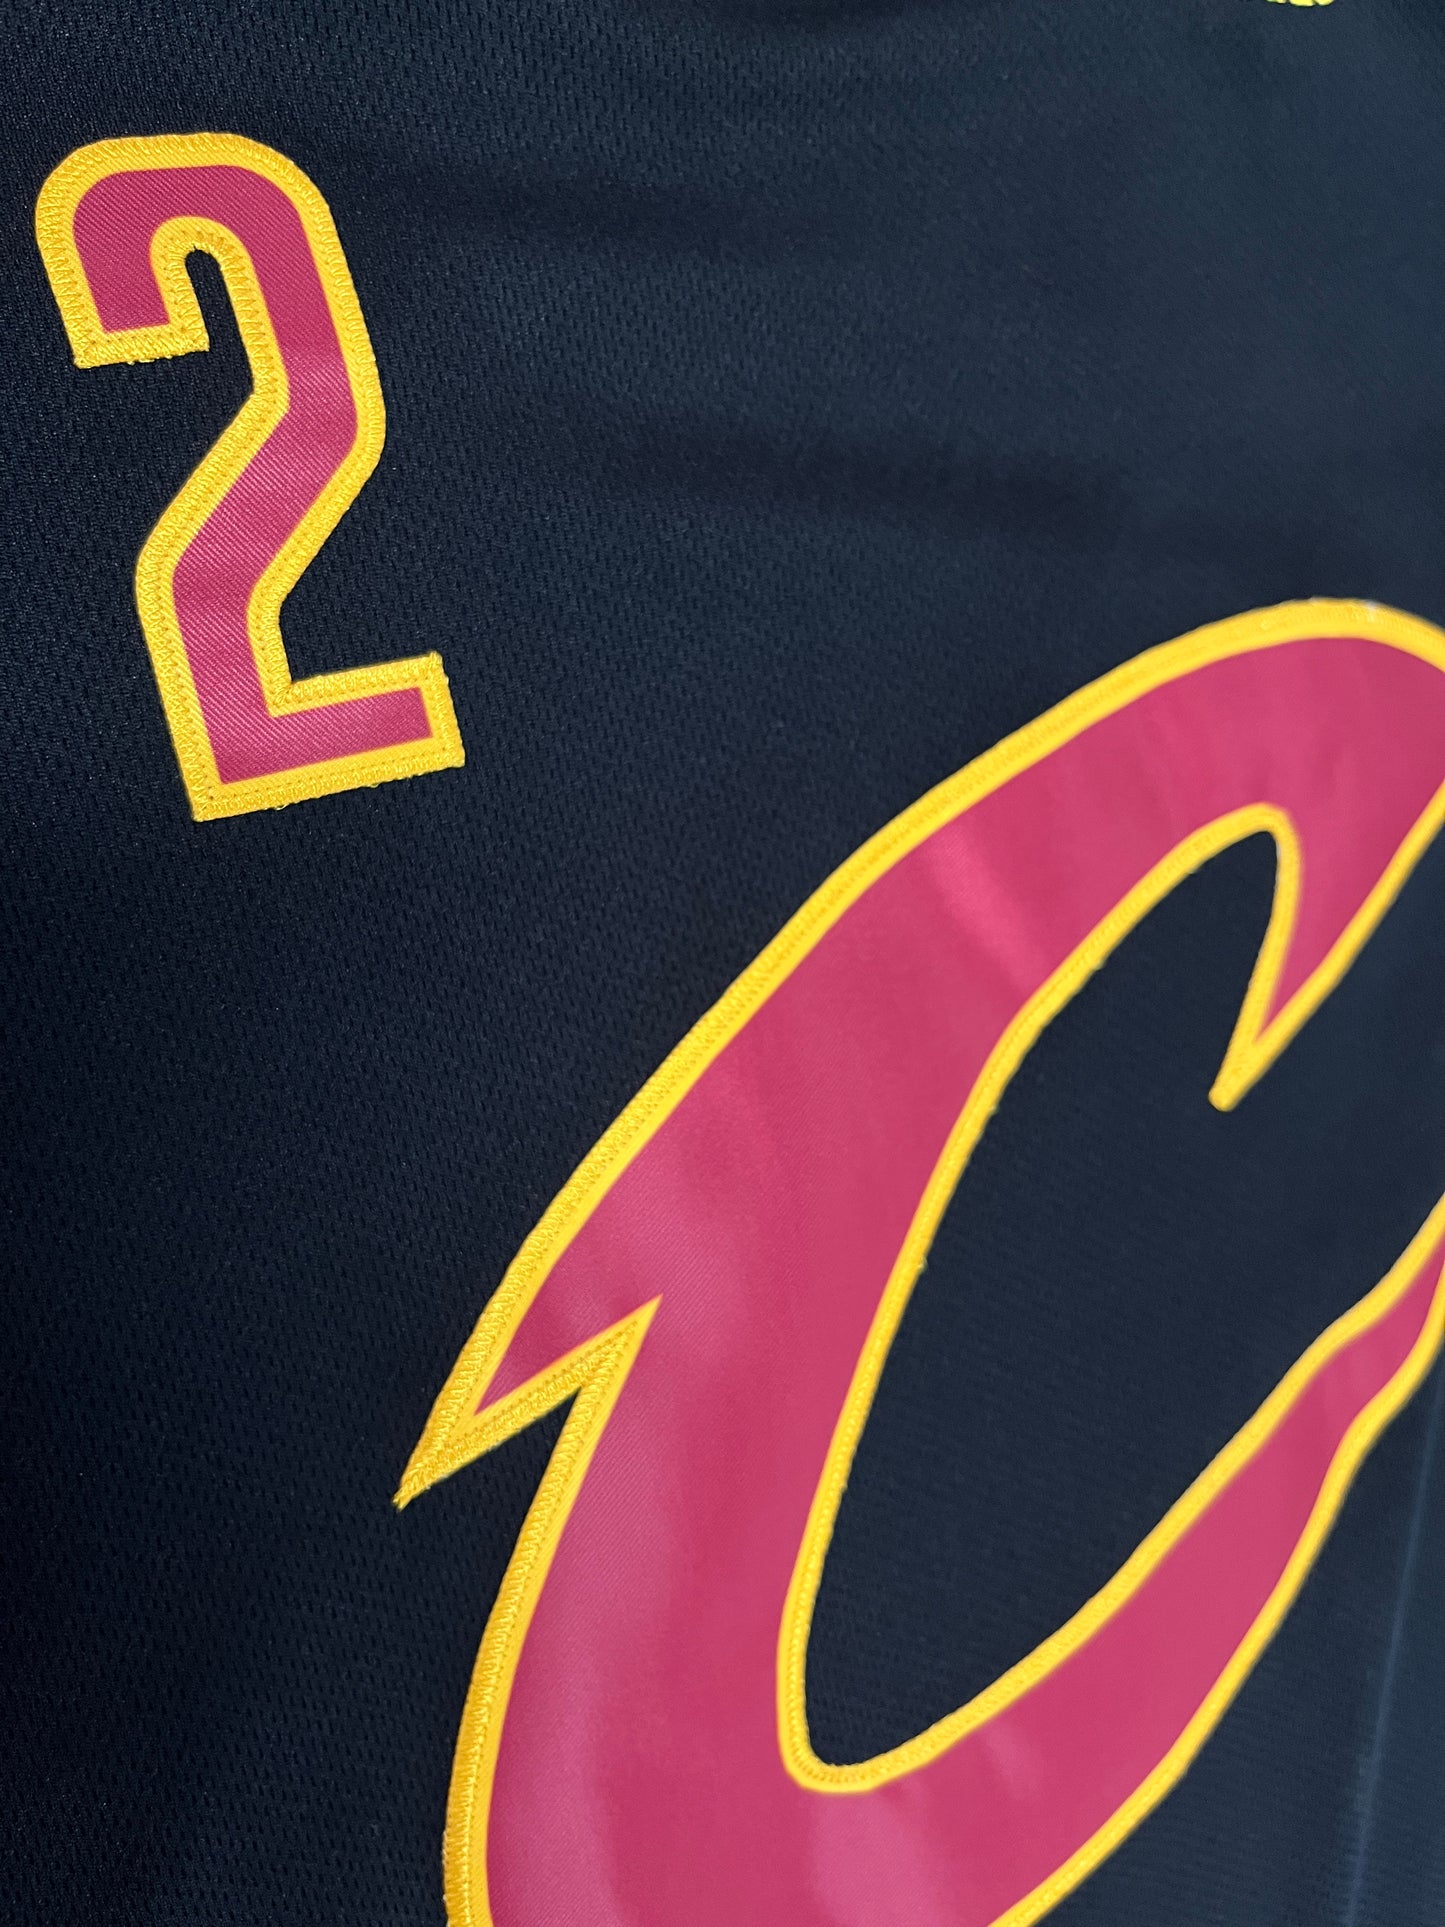 KYRIE IRVING 2 Black T-shirt Cleveland Cavaliers NBA Jersey